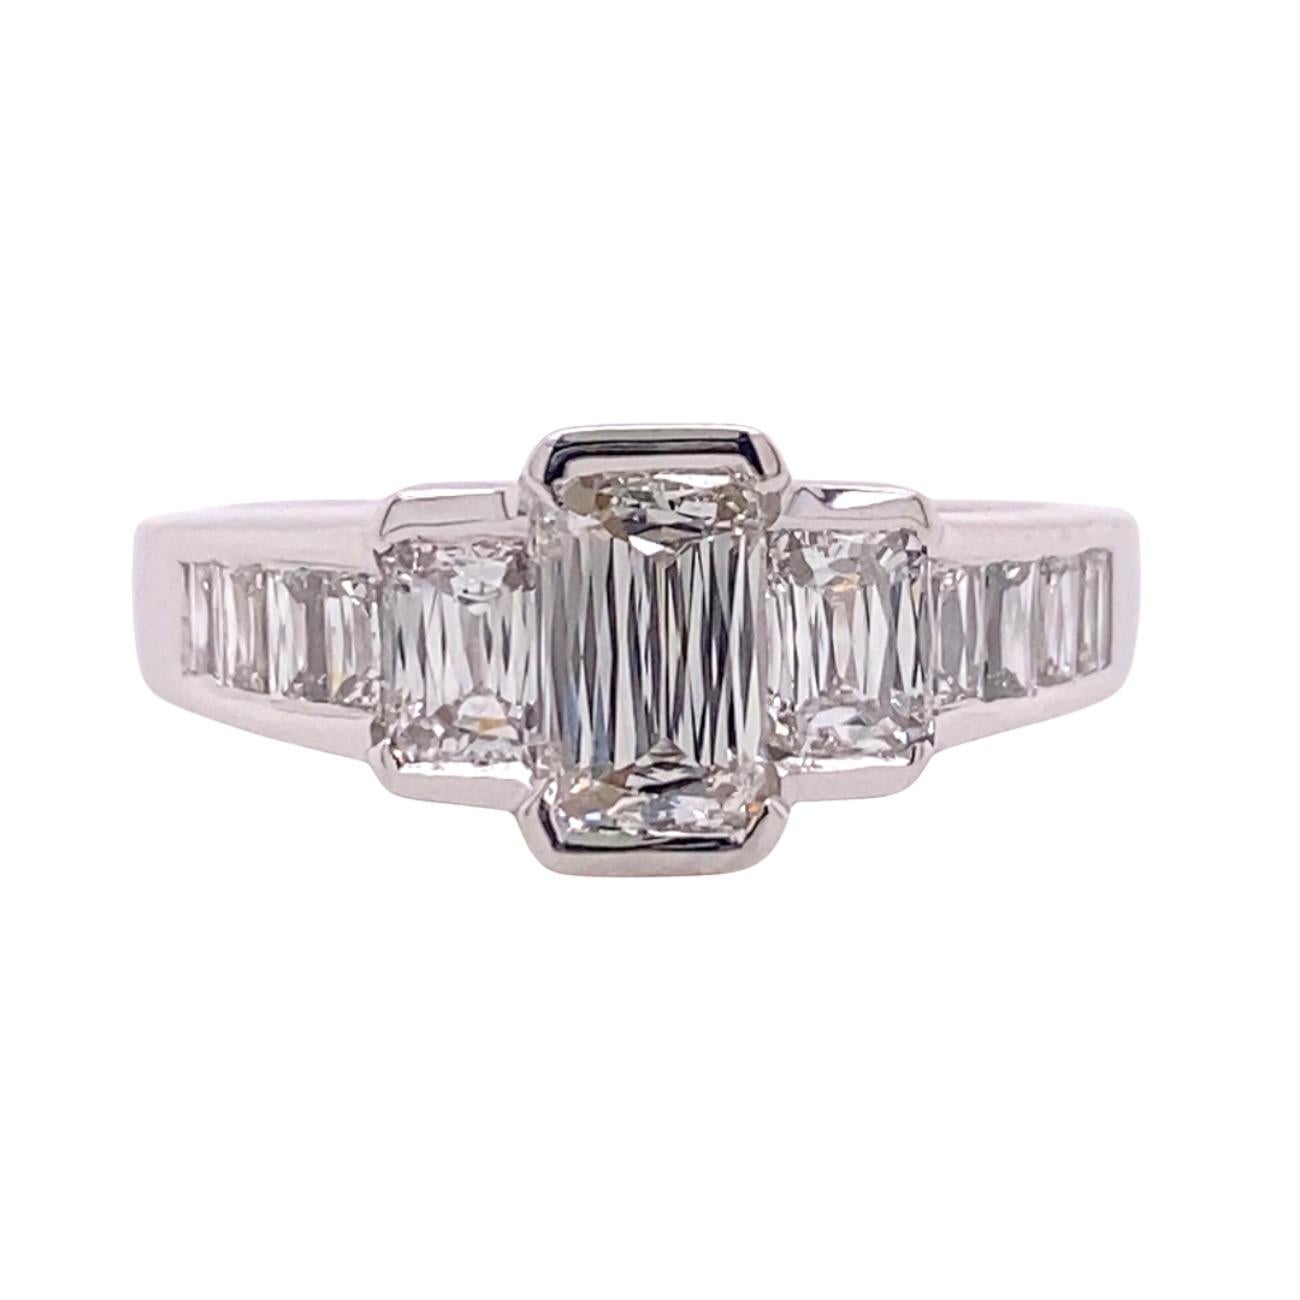 Christopher Designs CRISSCUT Diamond L'Amour Engagement Ring 1.75 tcw 18kt WG For Sale 4